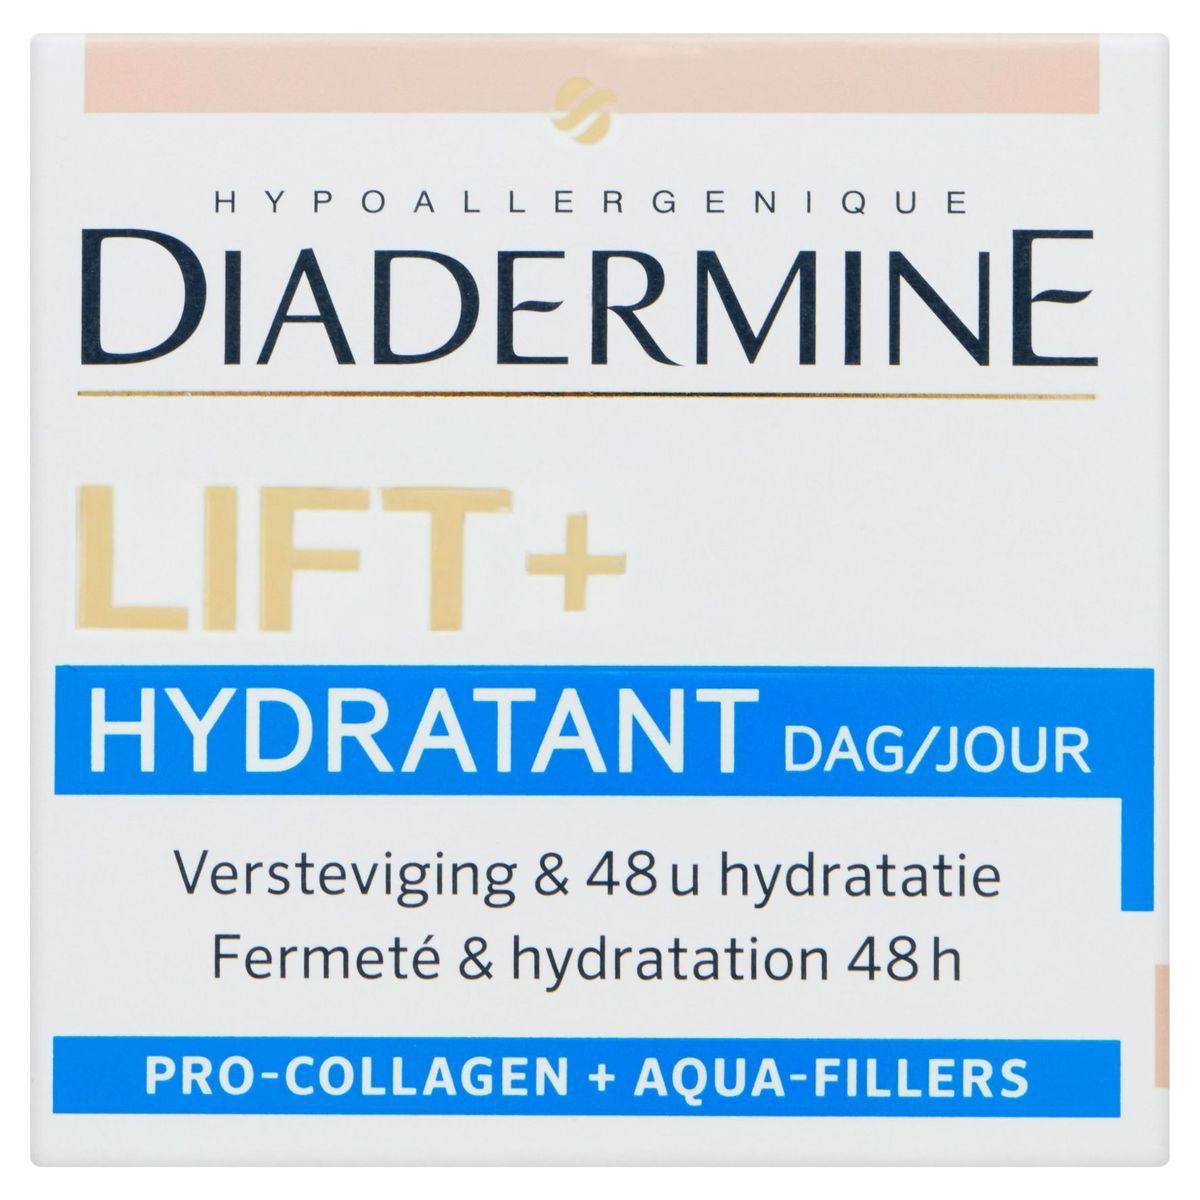 Diadermine Lift+ Hydratant Anti-Age Jour 50 ml